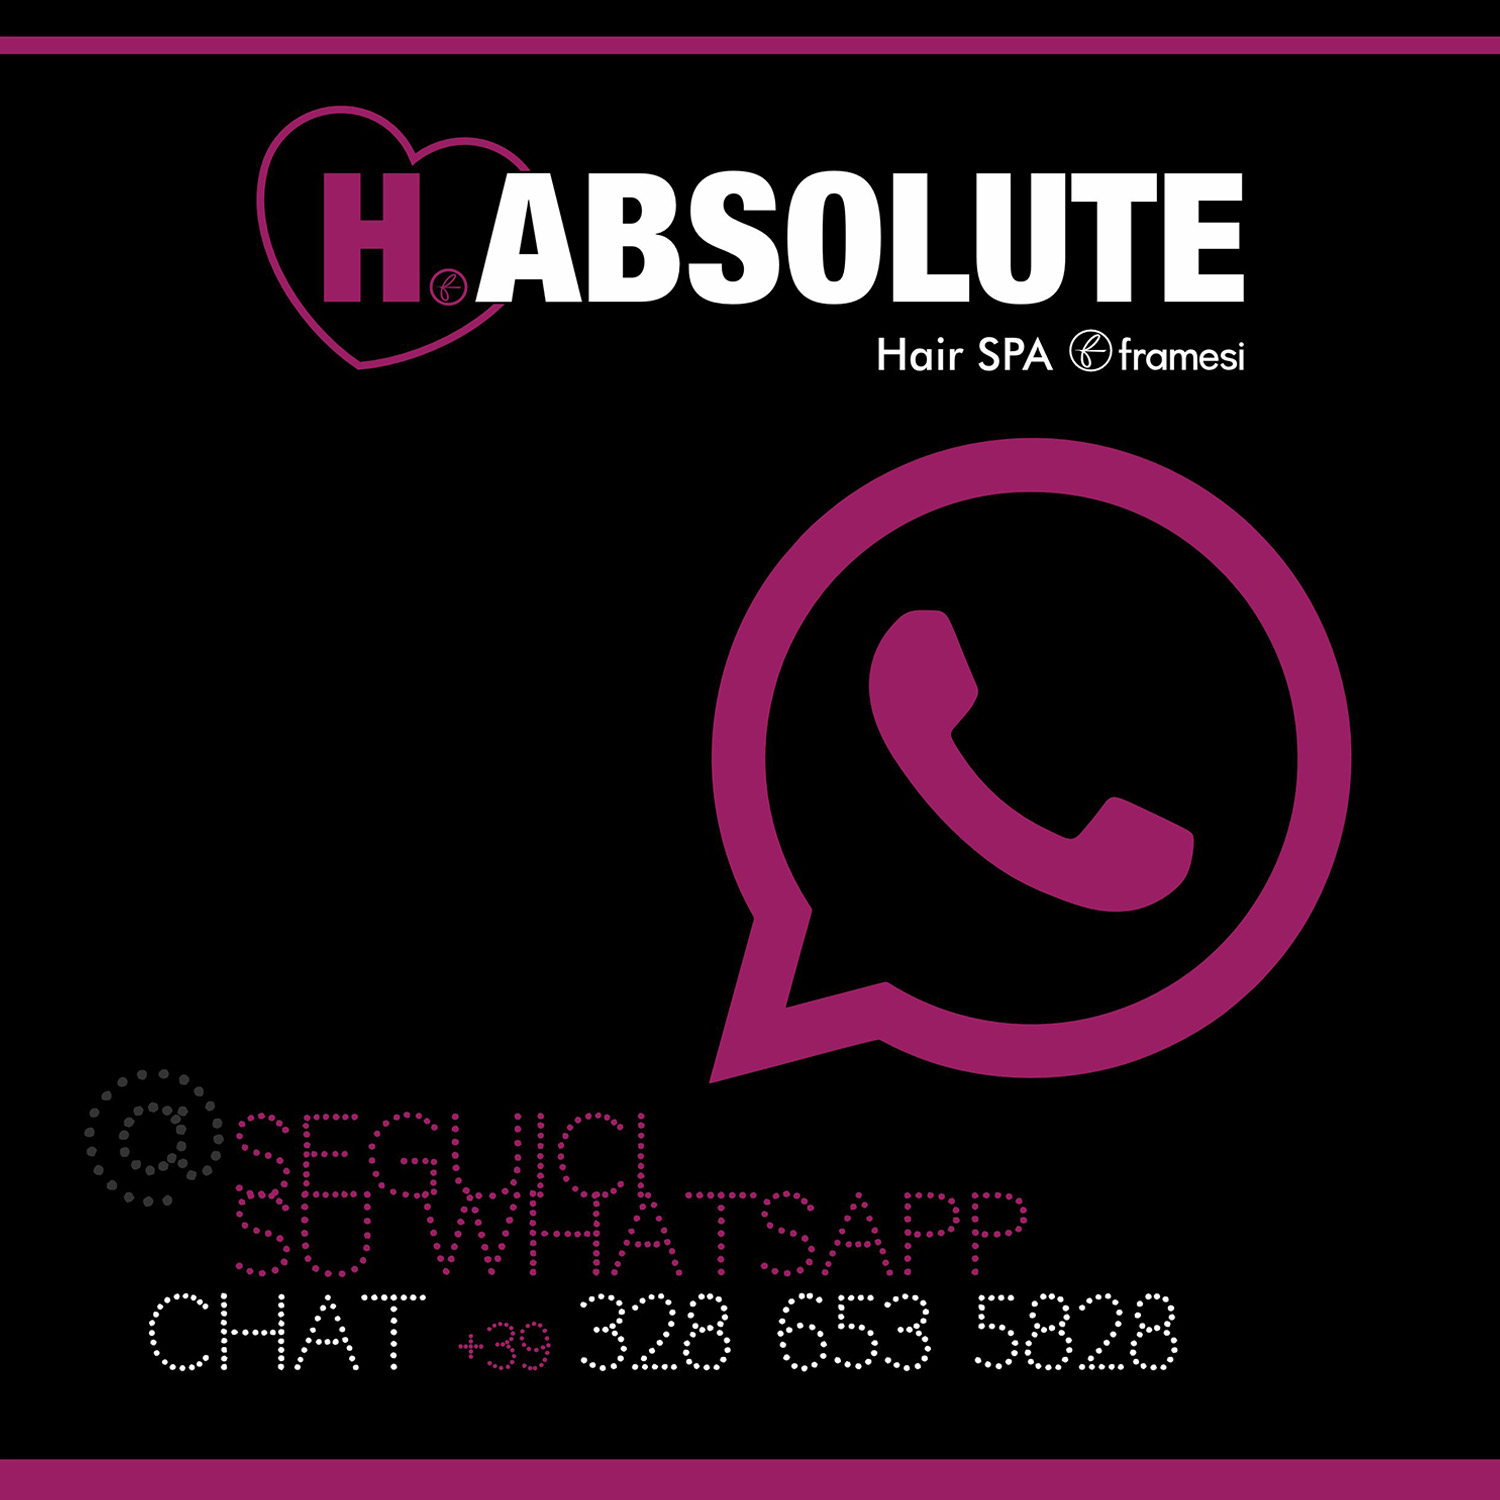 Whatsapp Habsolute